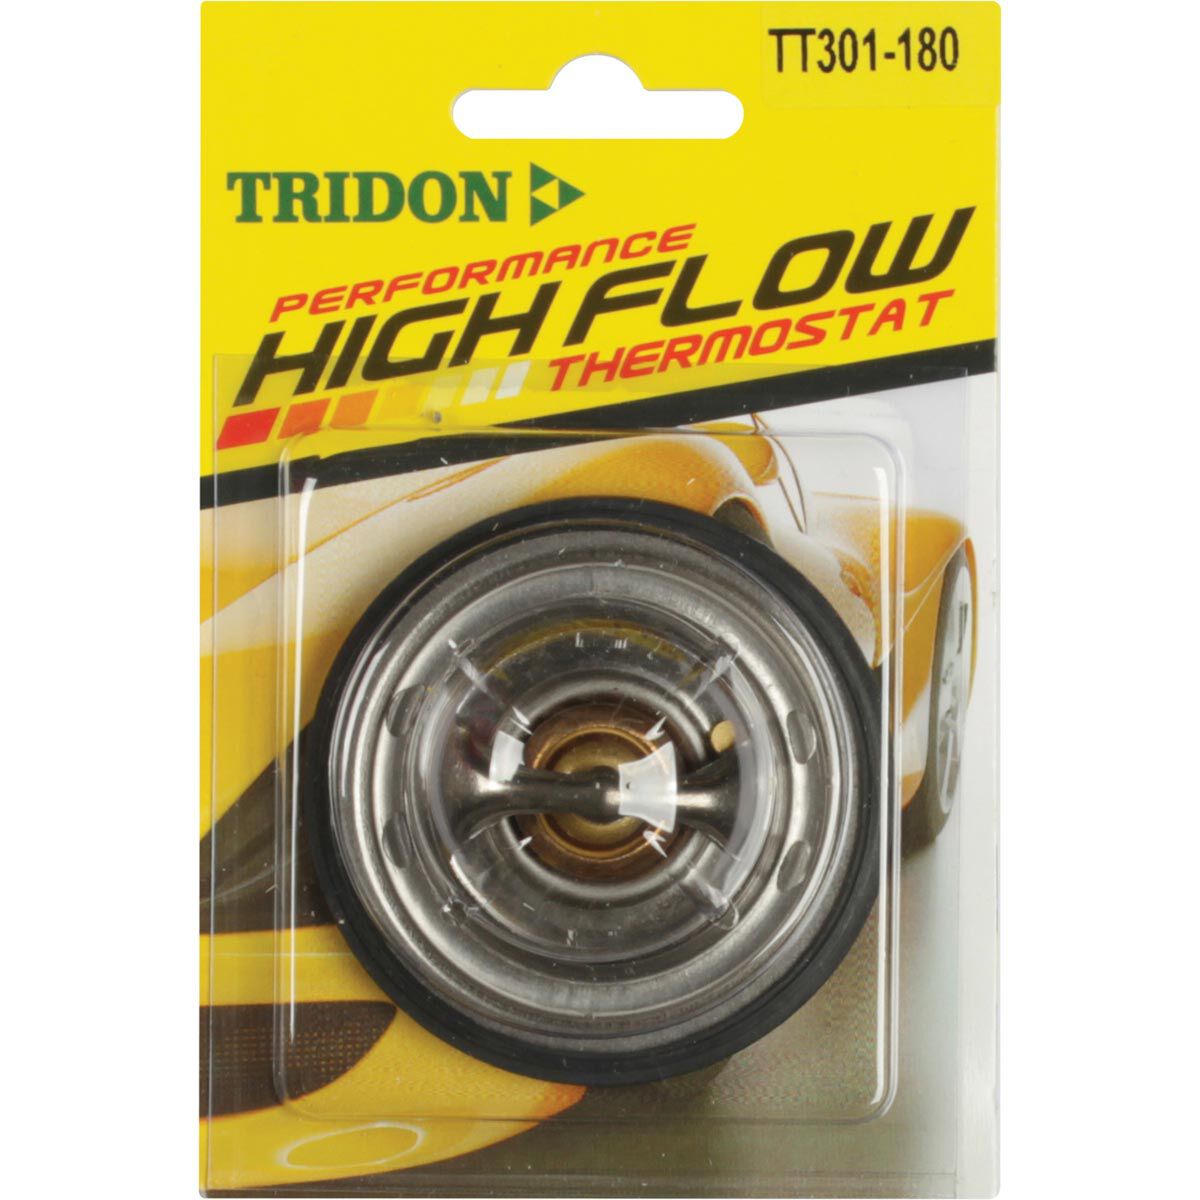 Tridon Thermostat - TT301-180, , scaau_hi-res